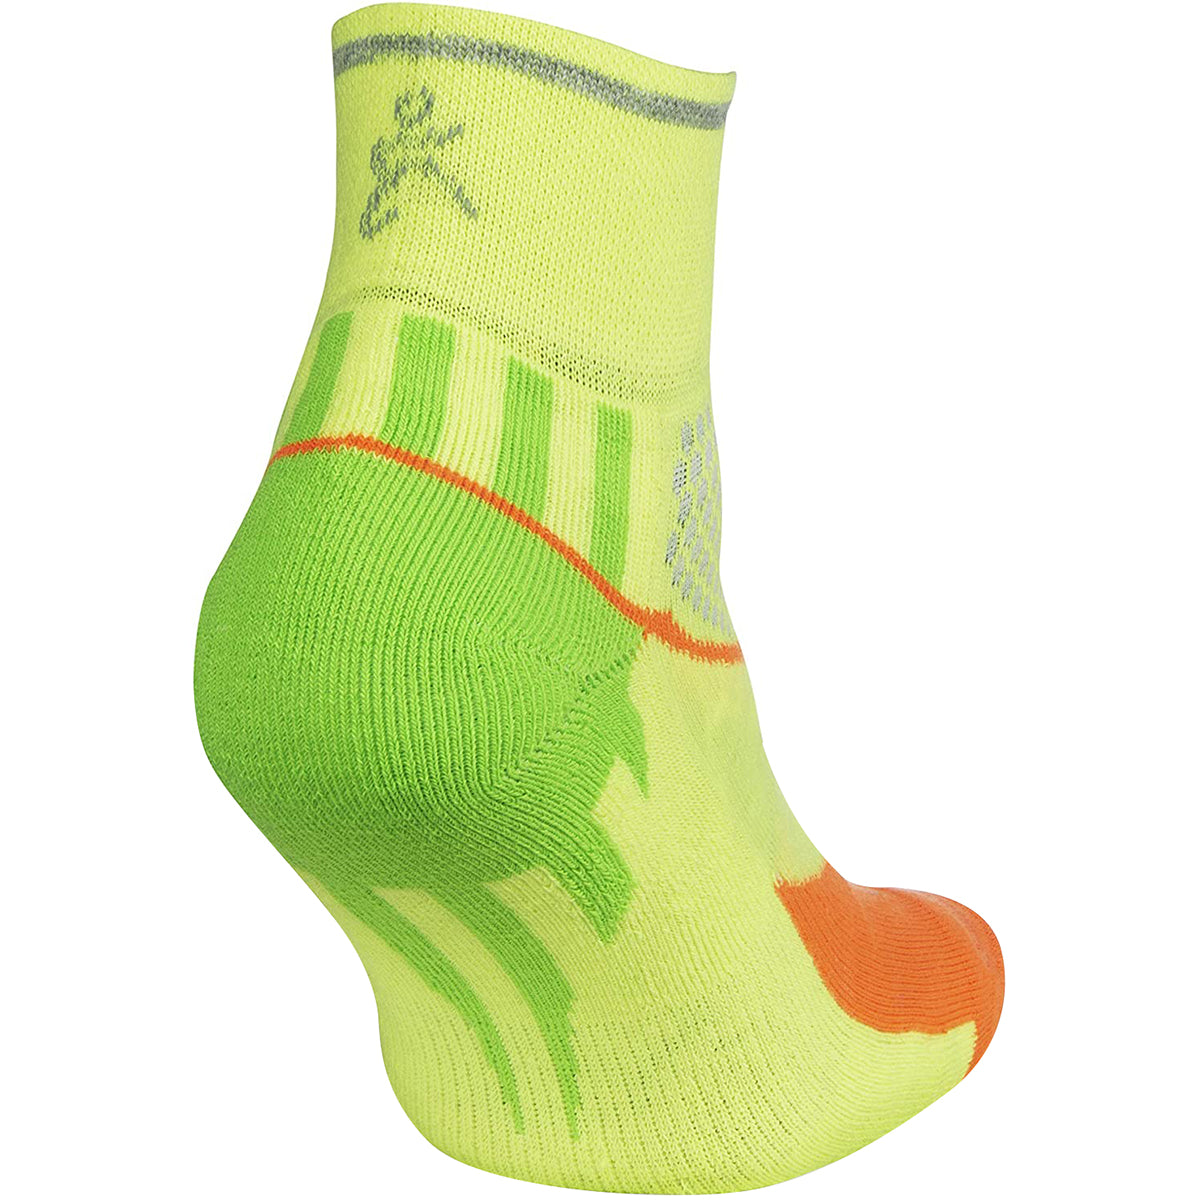 Balega Enduro Reflective Quarter Length Running Socks - Multi-Neon Balega